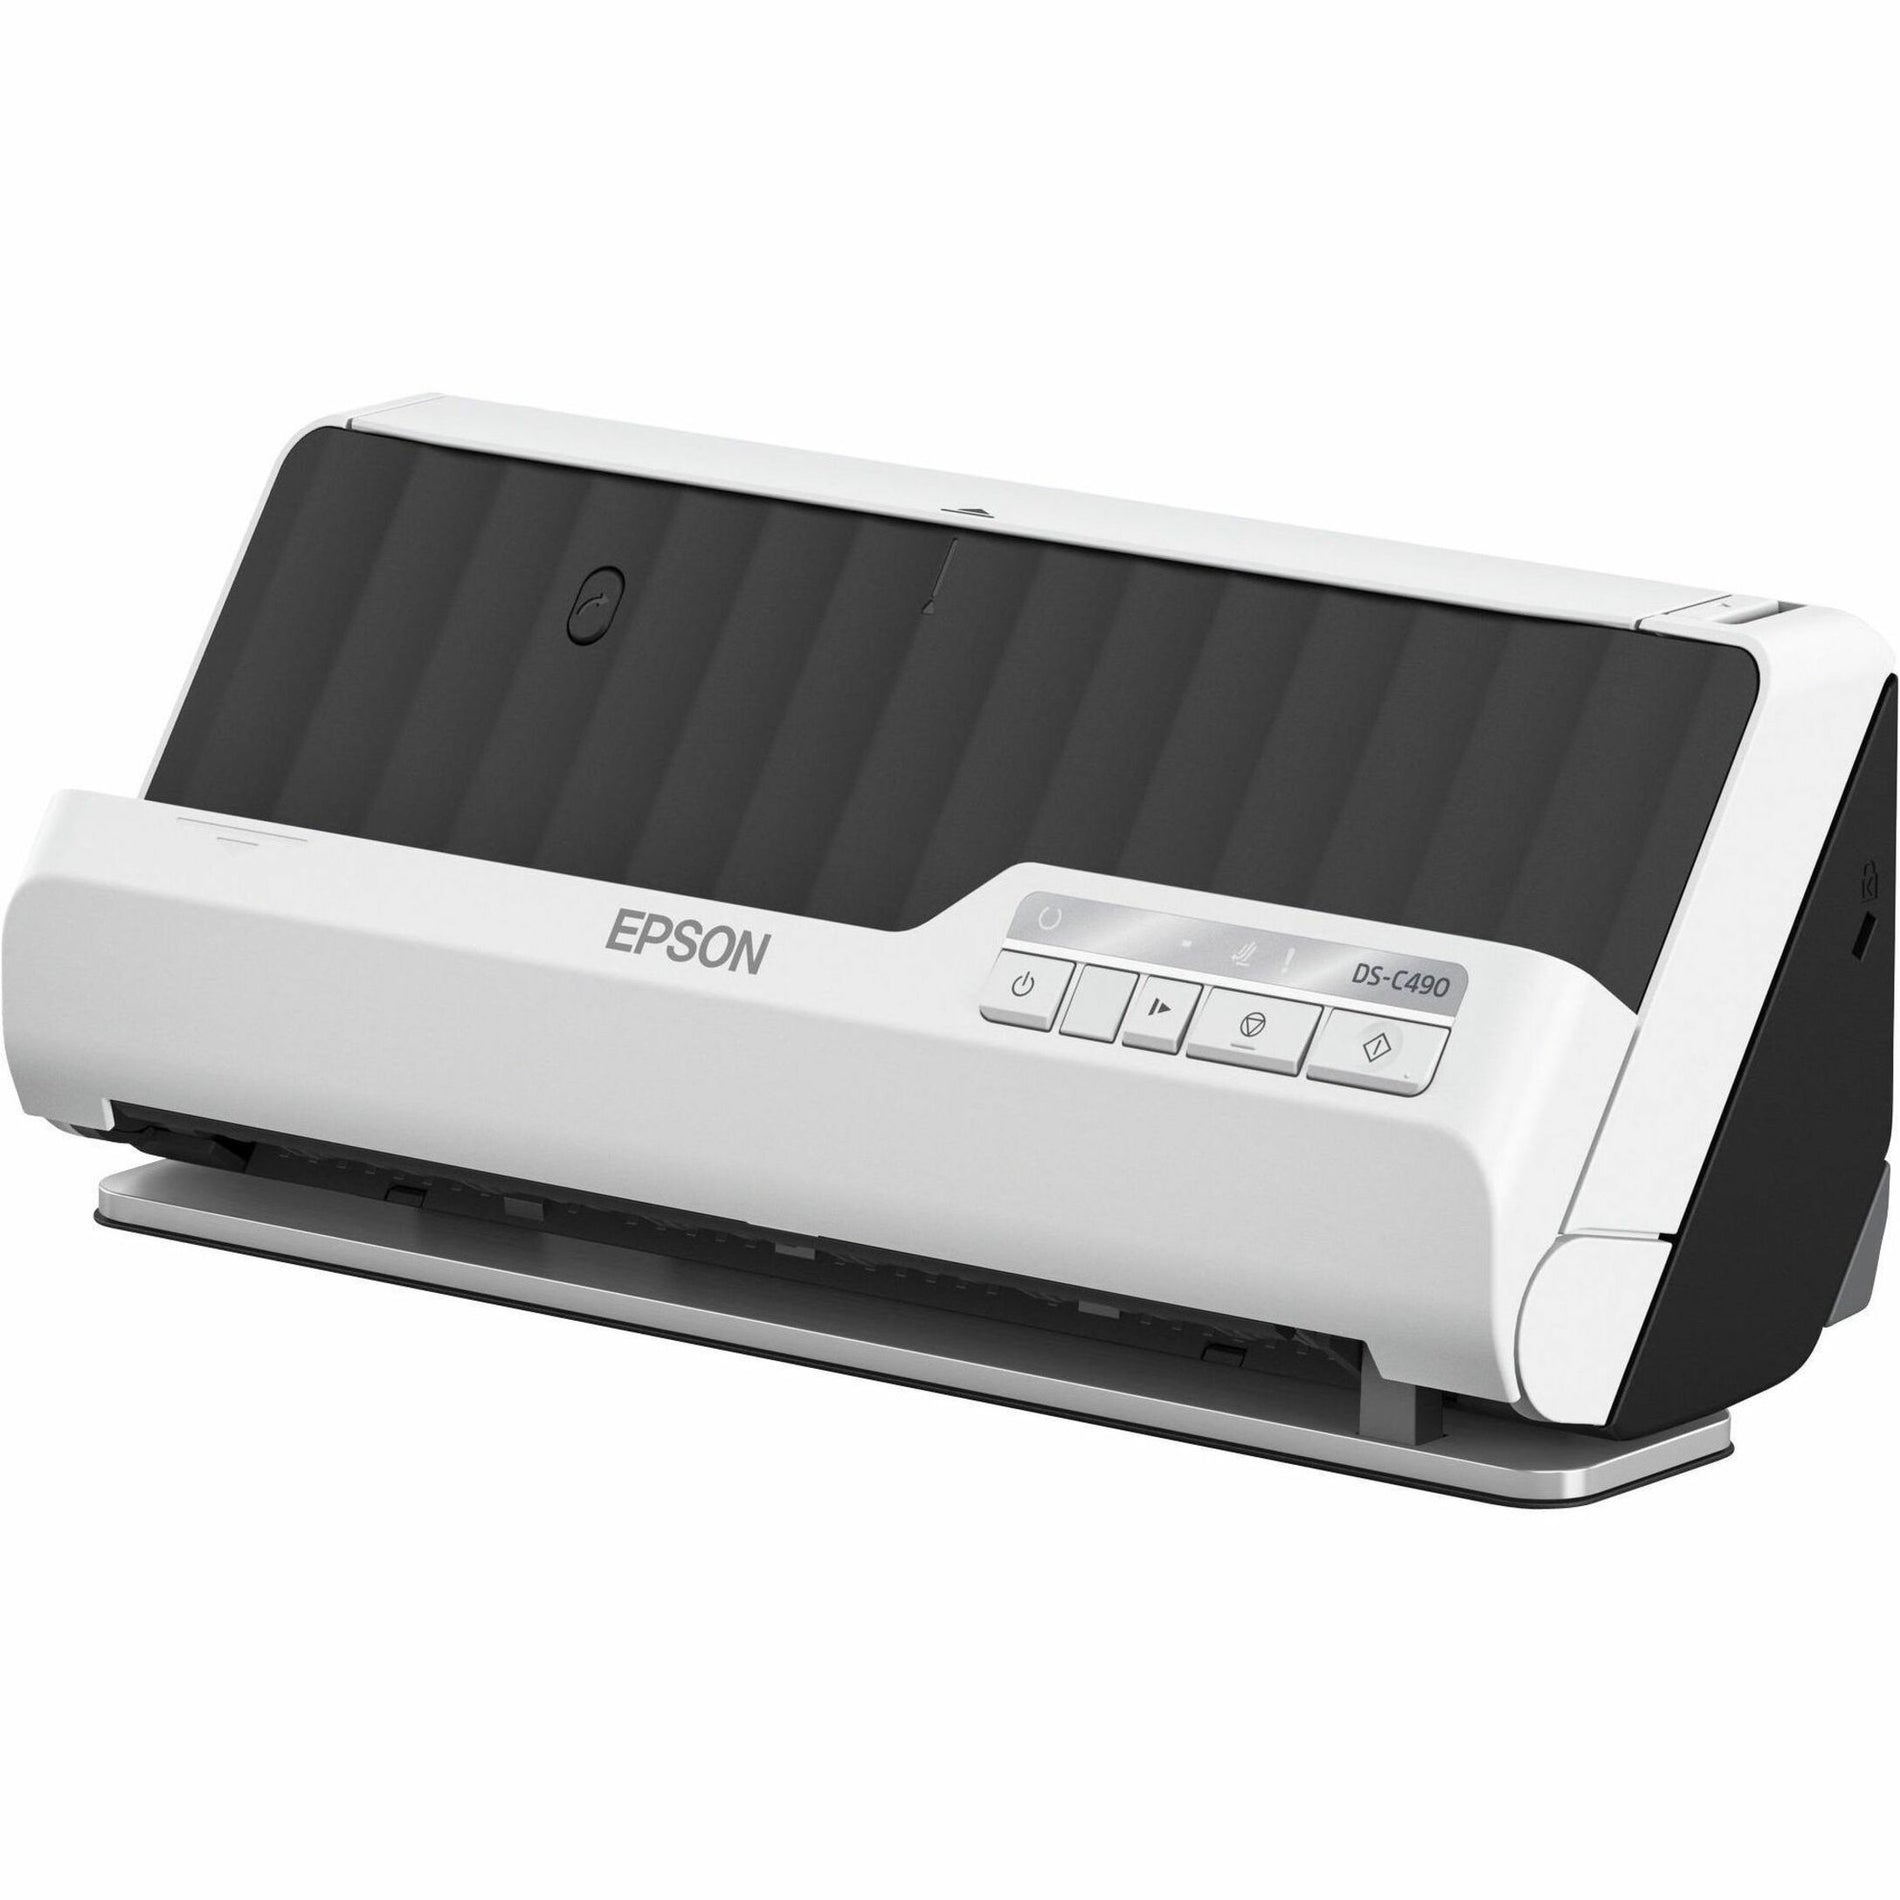 Epson B11B271201 DS-C490 Sheetfed Scanner - High-Speed, Duplex Scanning, 600 dpi Optical